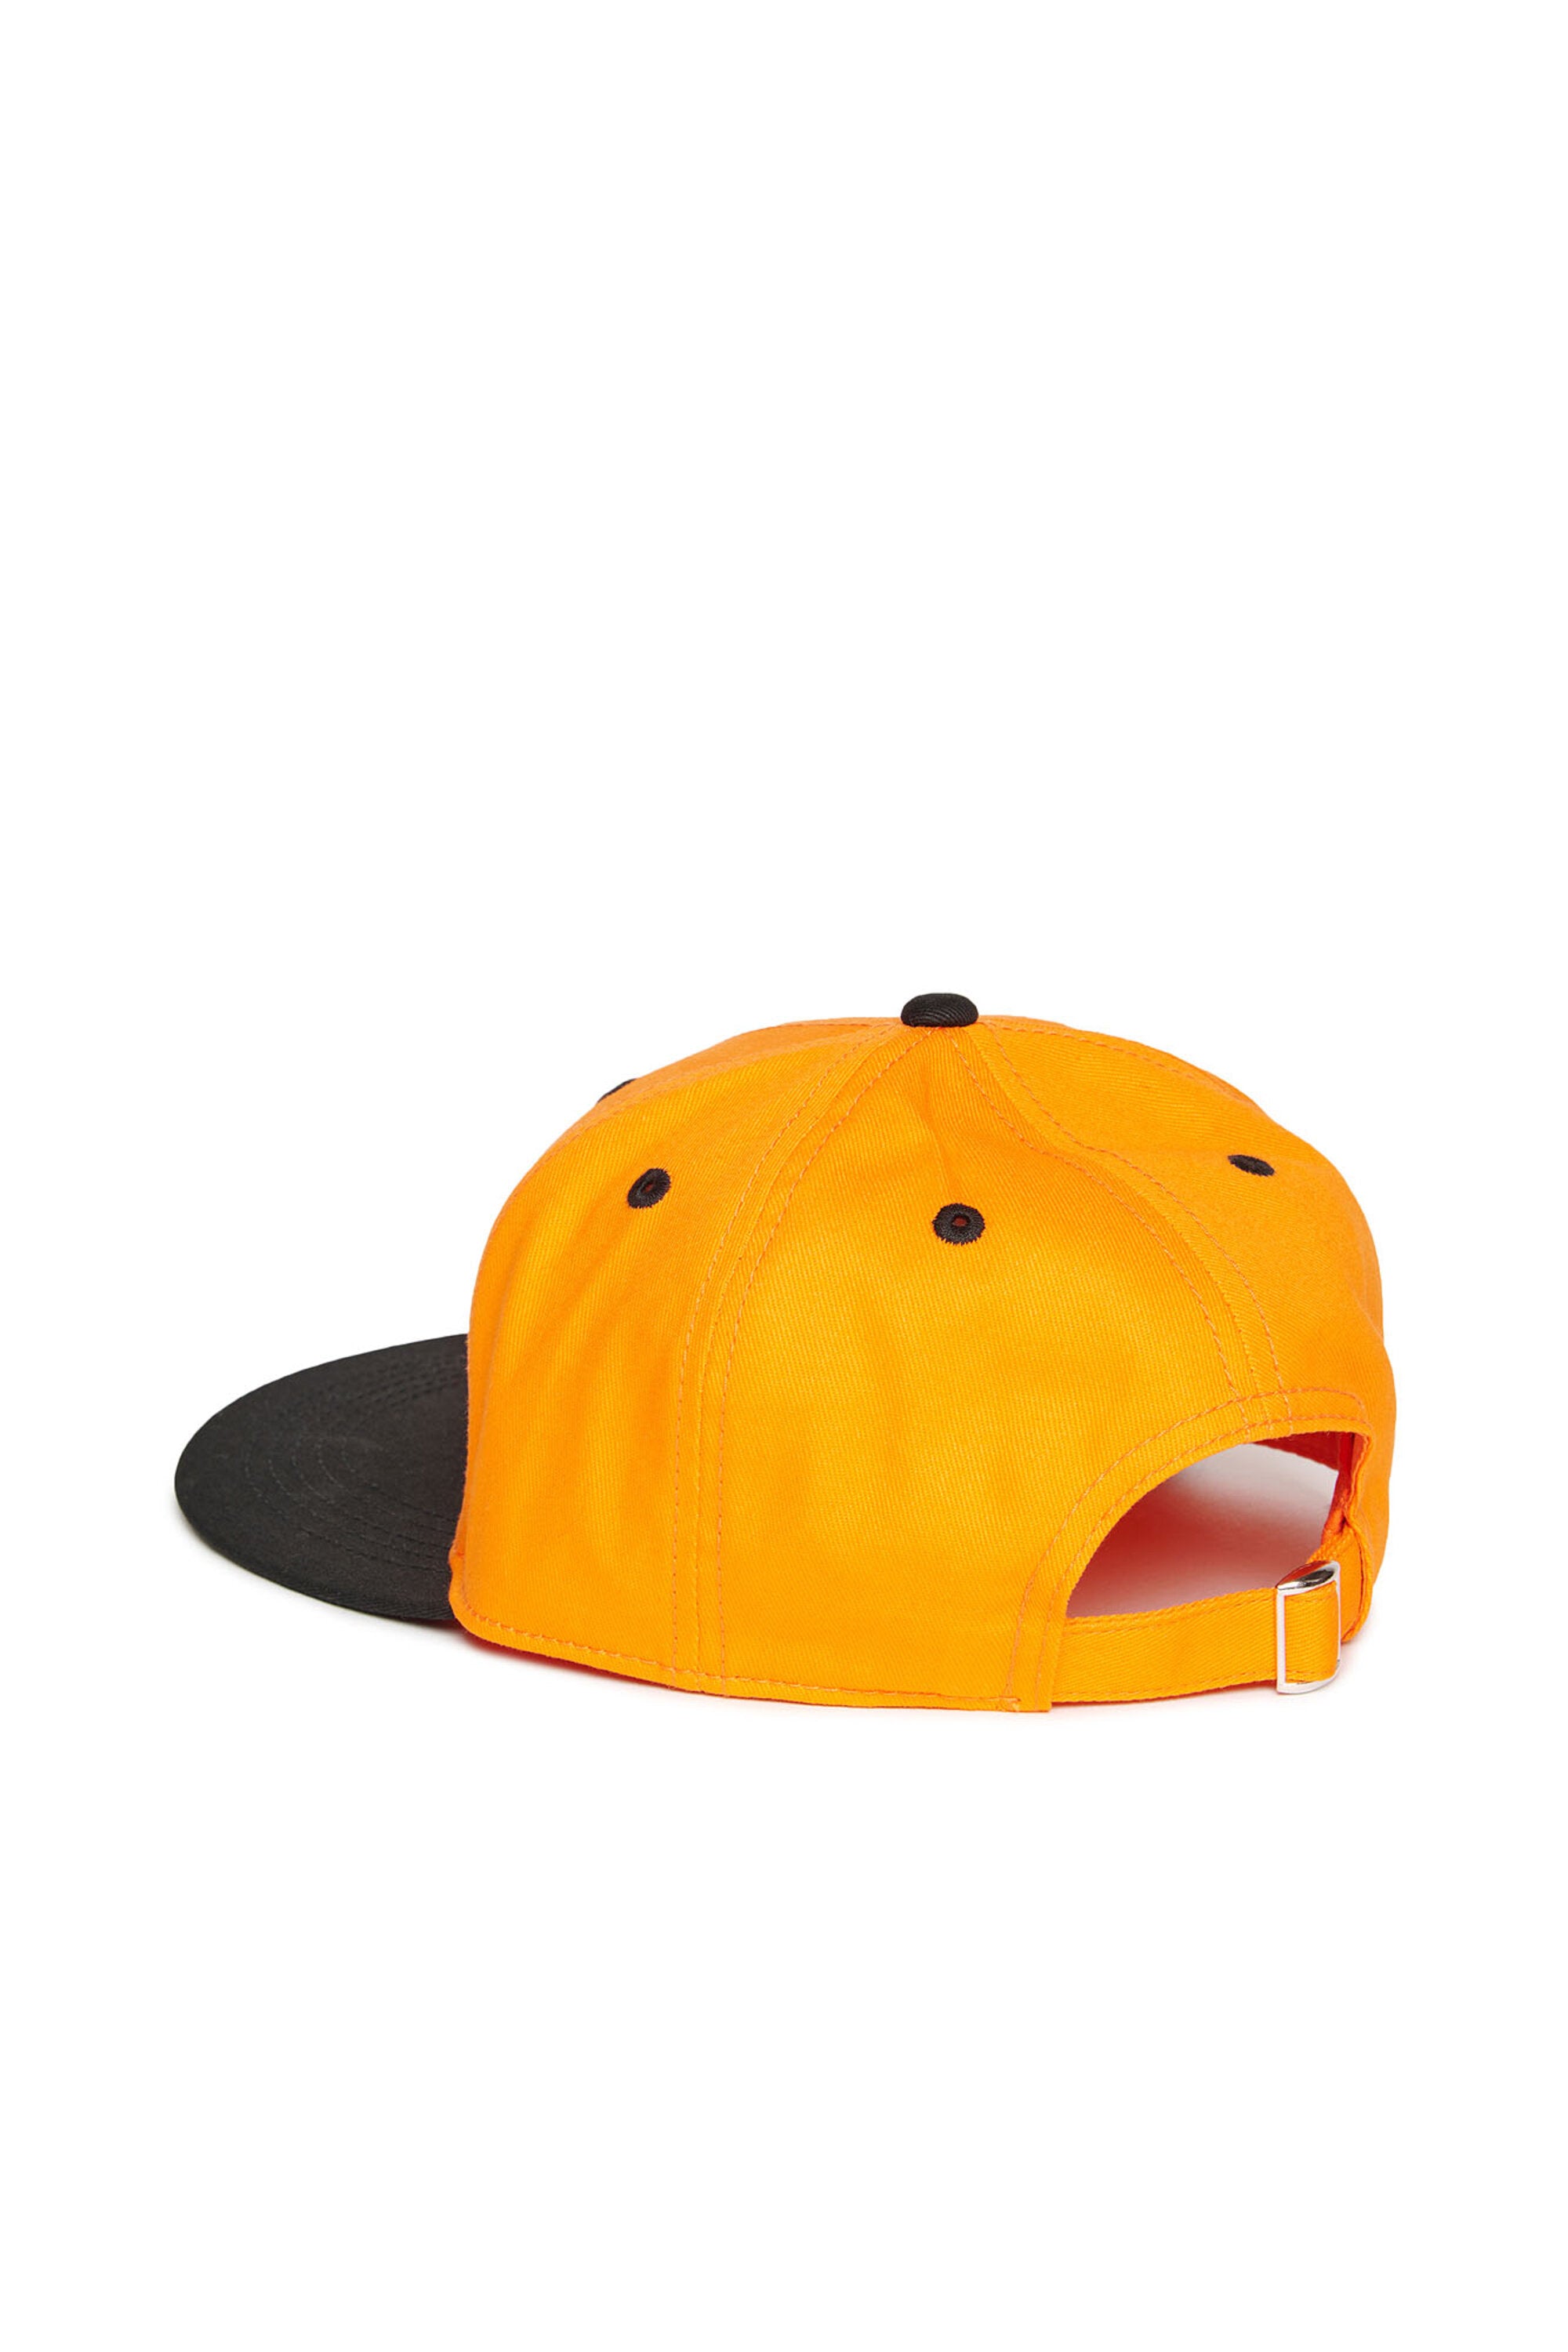 Branded snapback hat